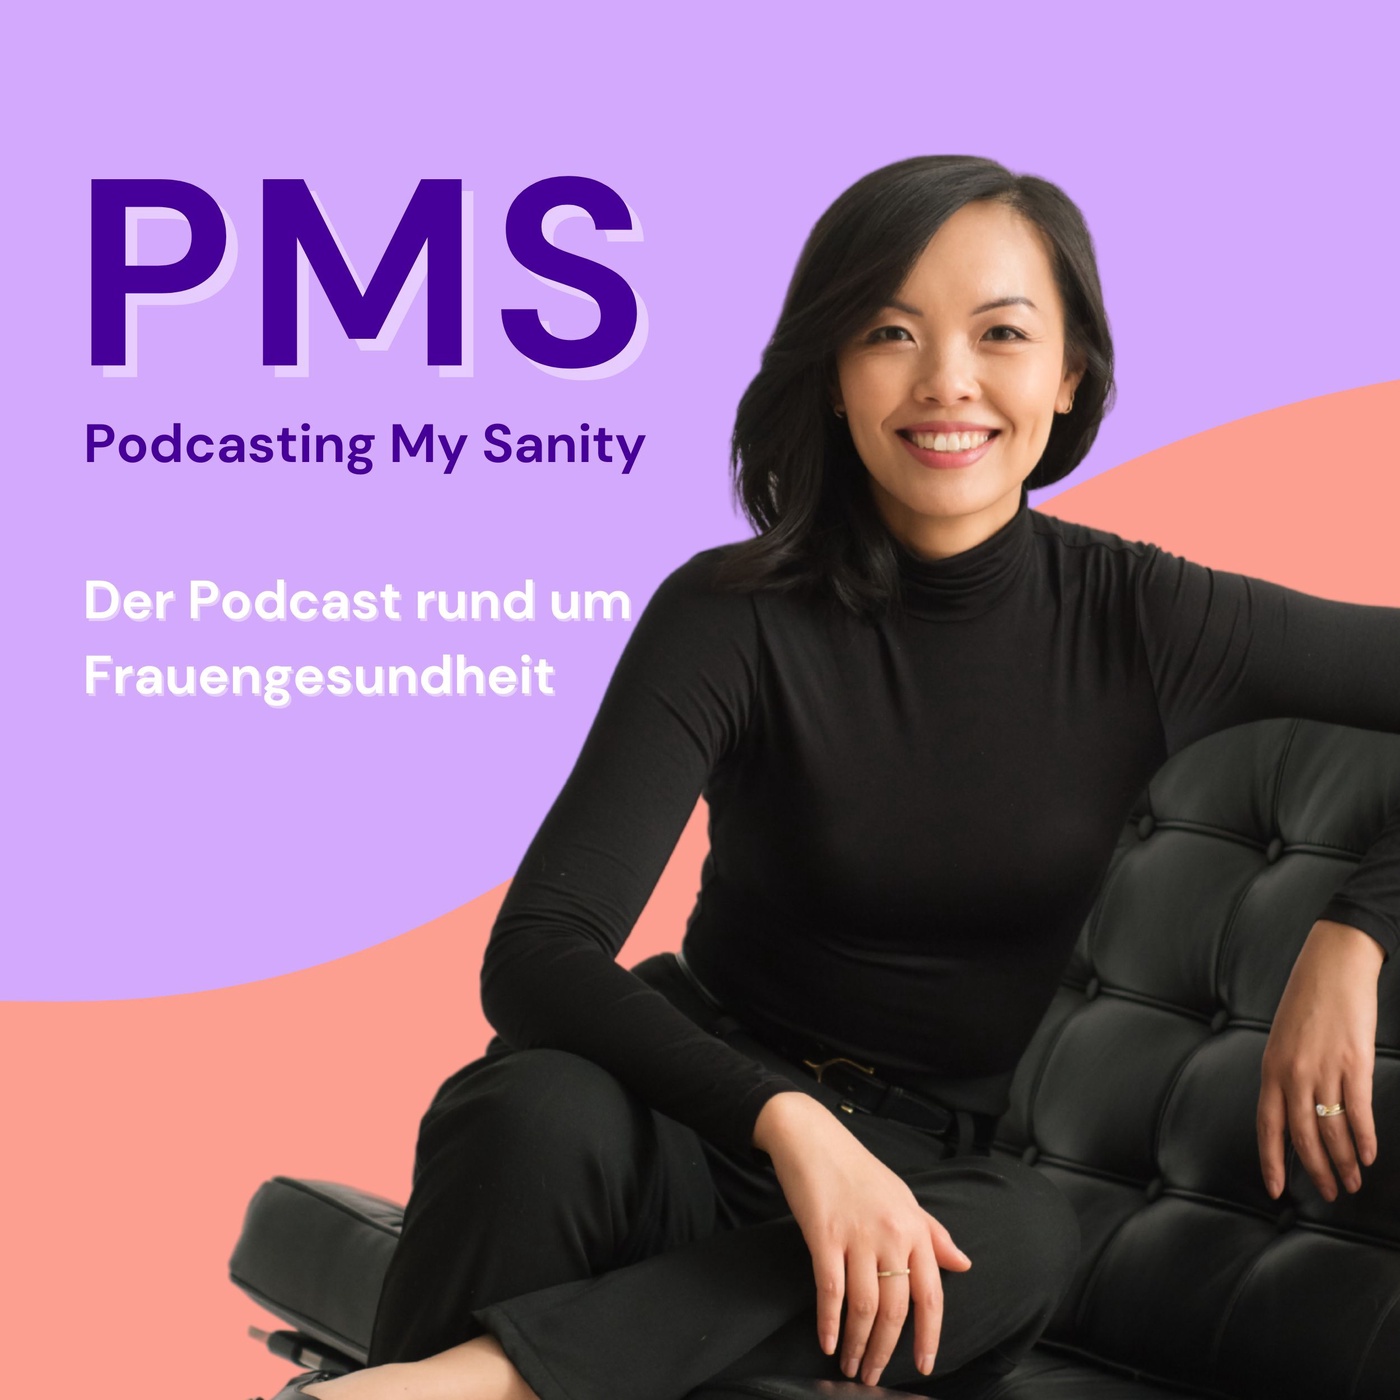 PMS – Podcasting my Sanity